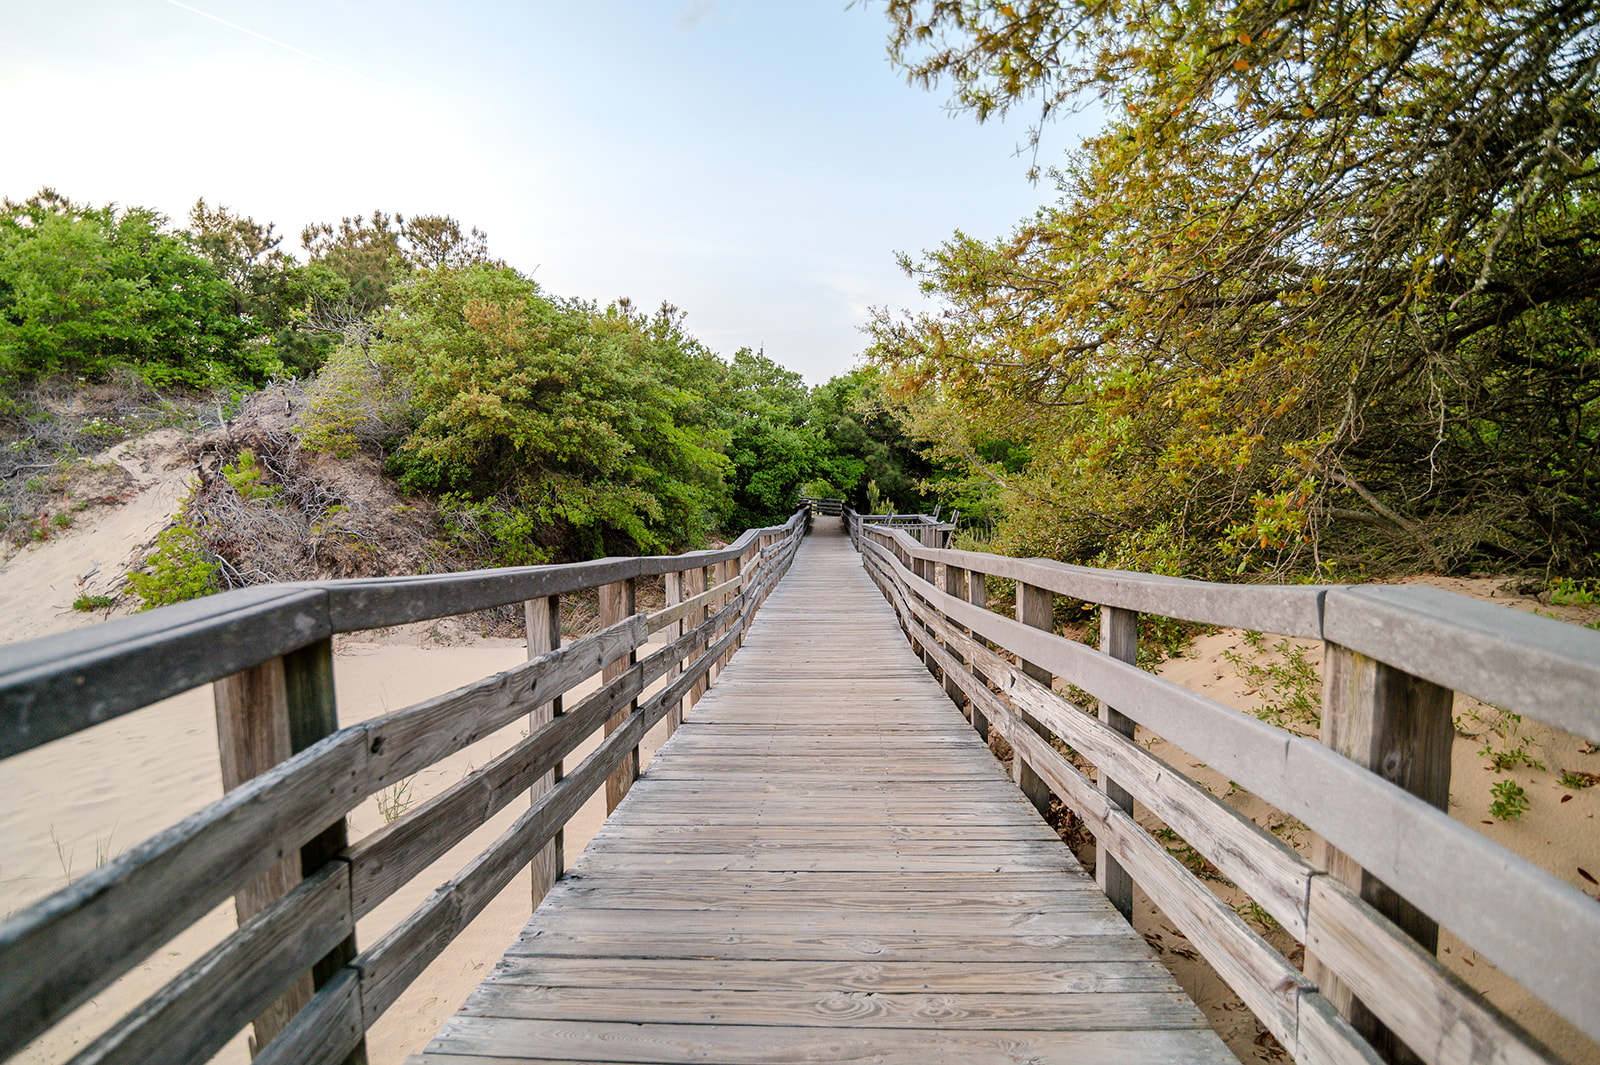 Image of a boardwalk leading into a sandy, live oak tree-filled forest.